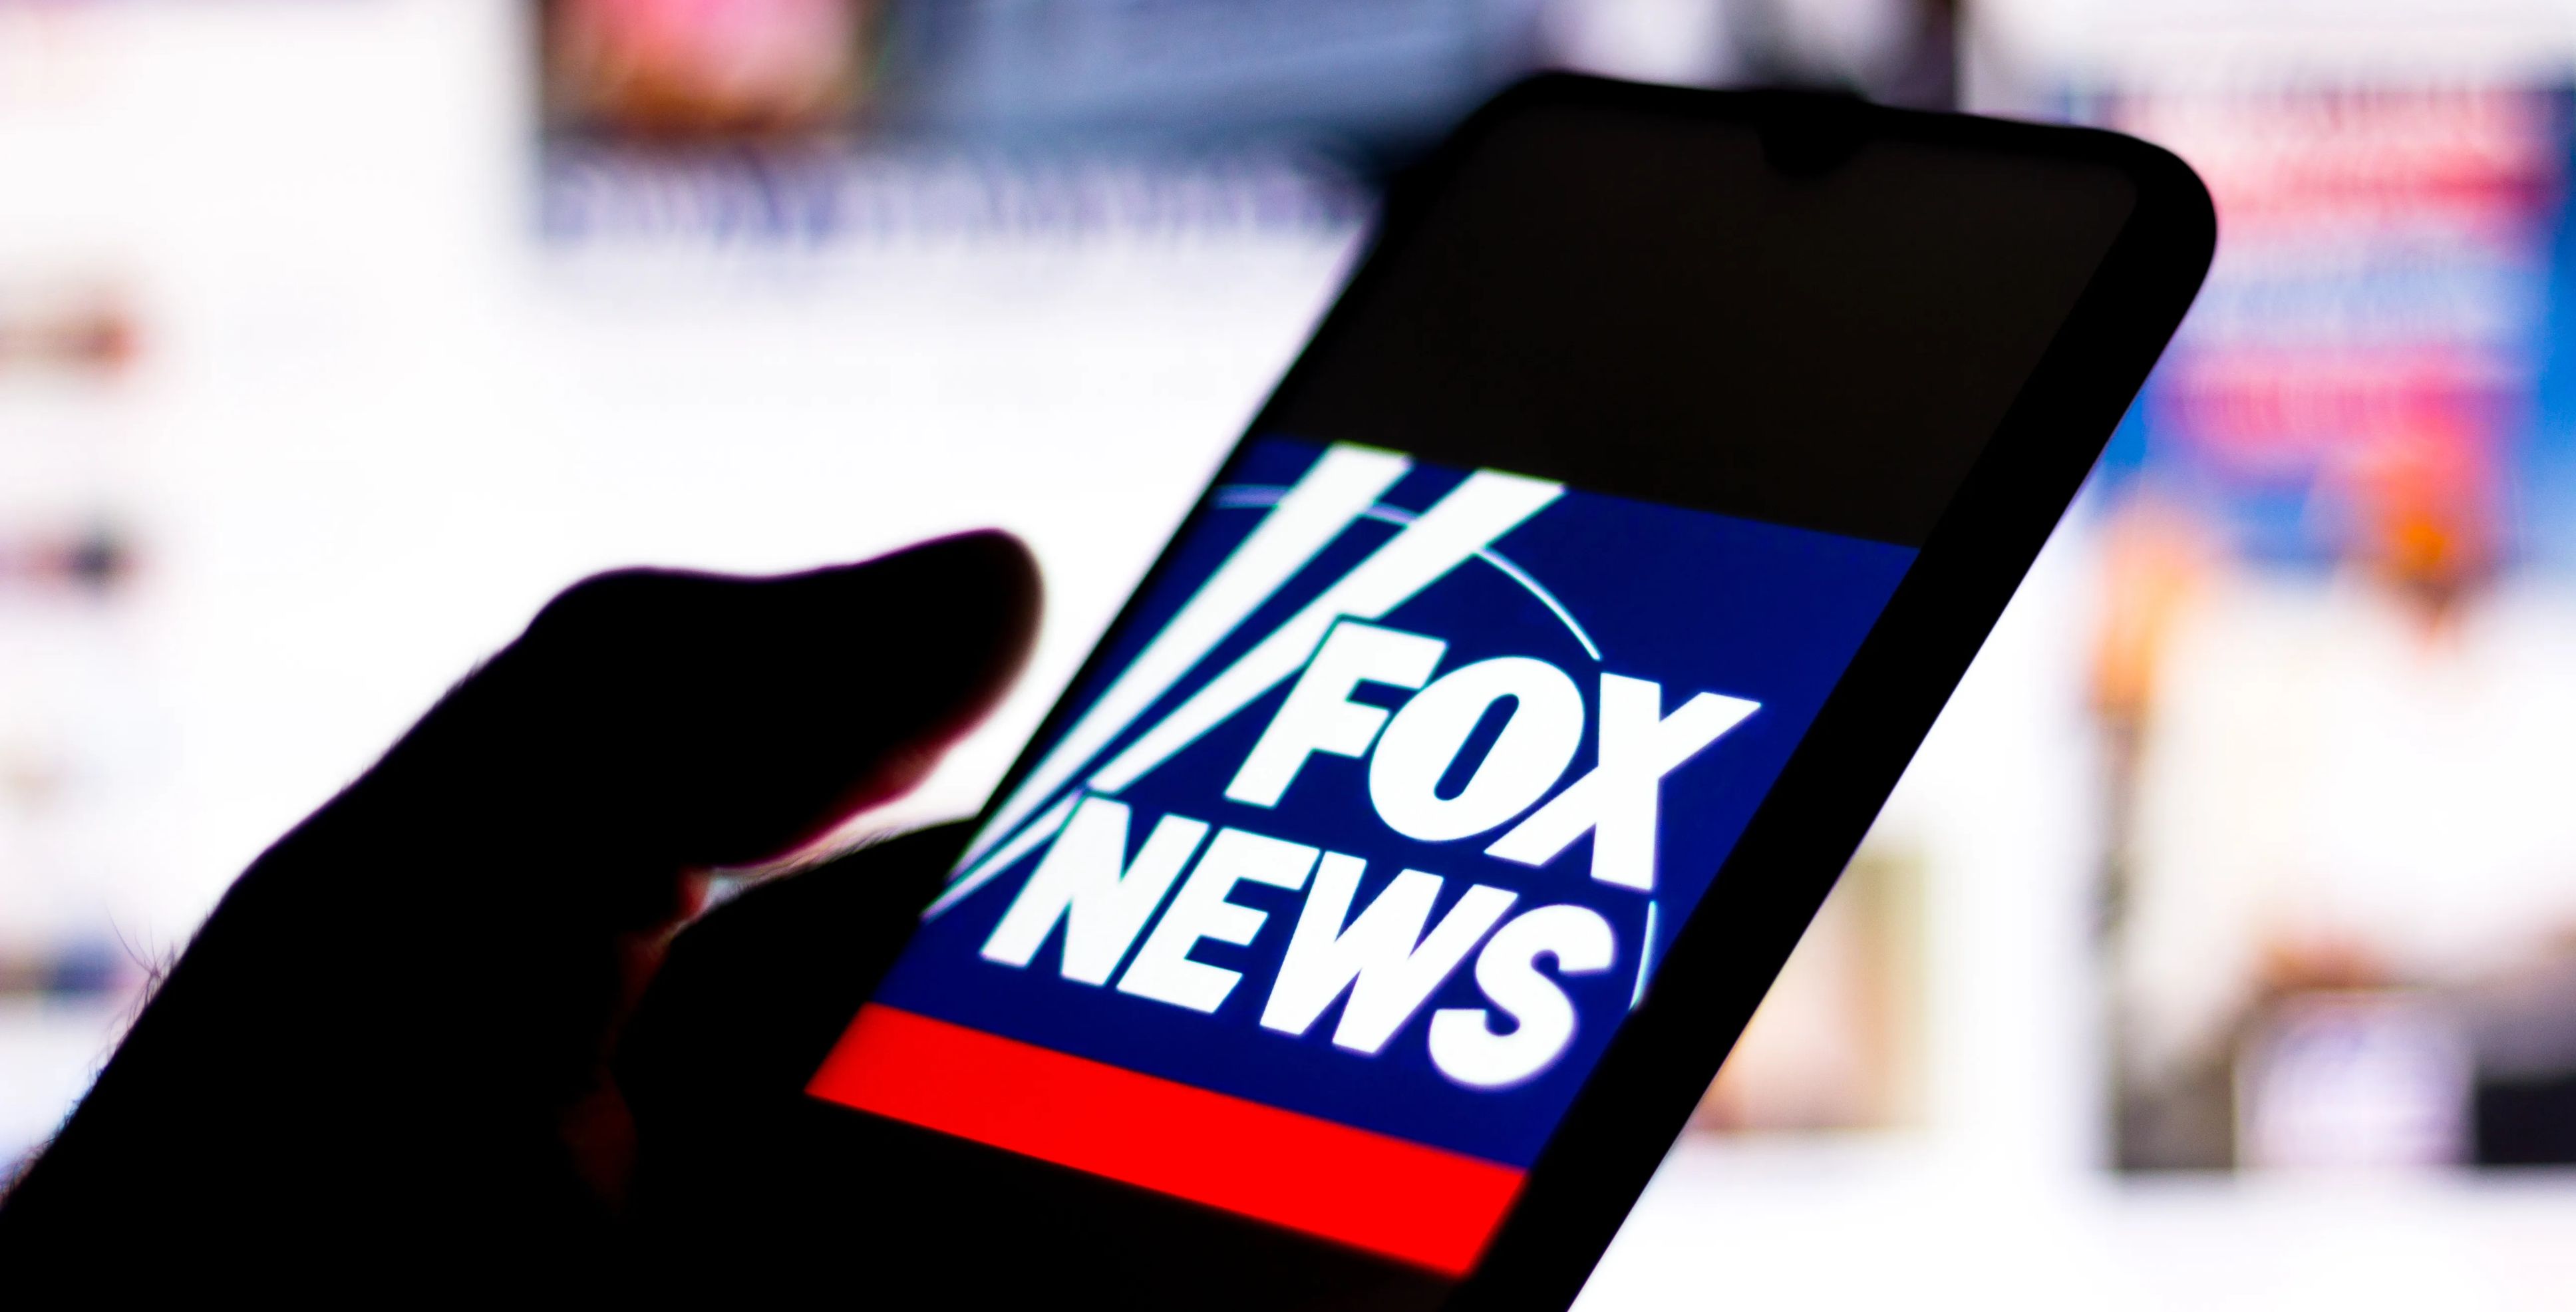 Fox News logo on a smartphone screen.